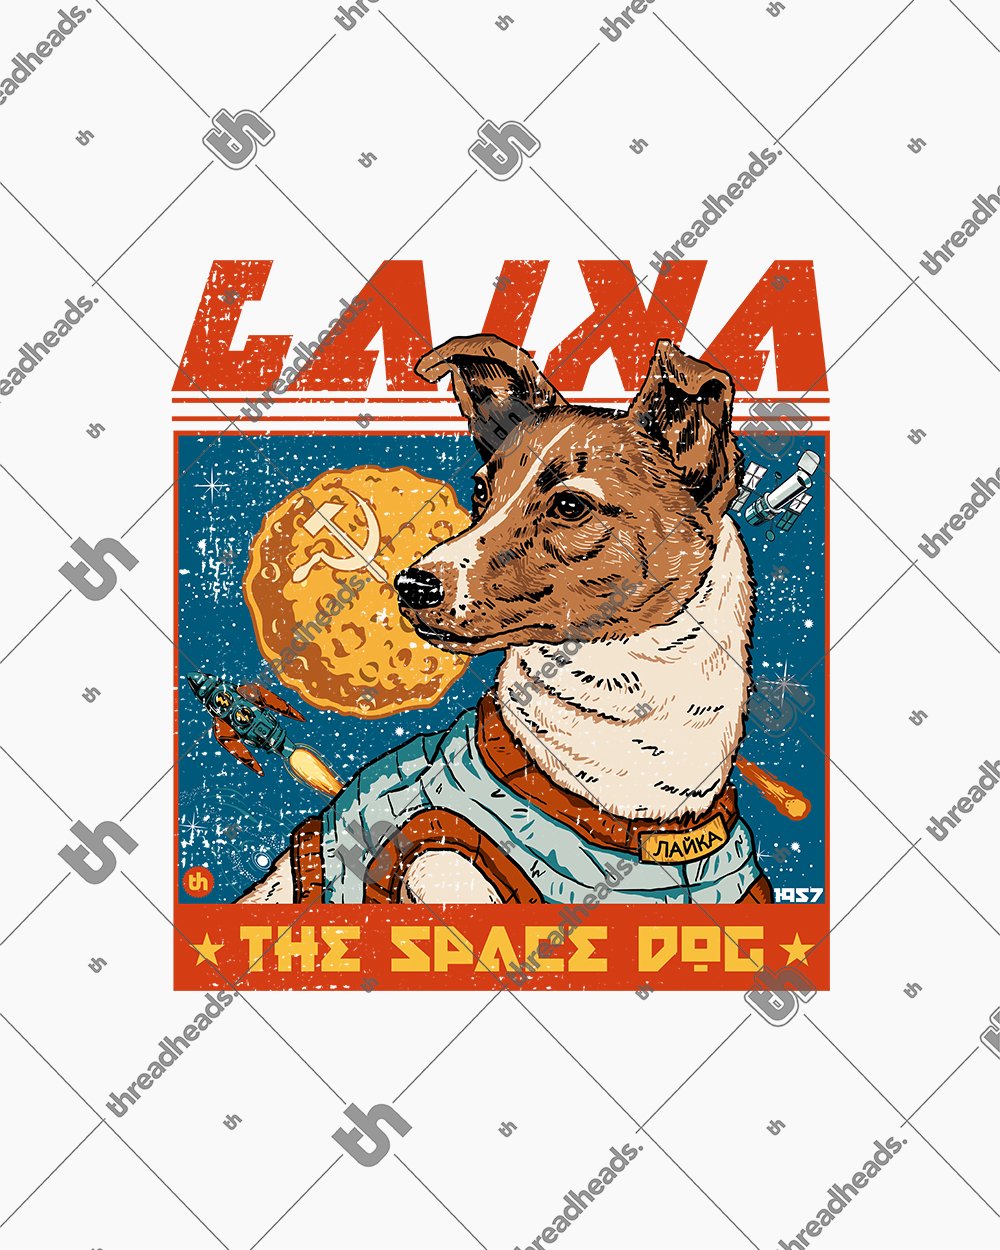 Laika the Space Dog T-Shirt Australia Online #colour_white